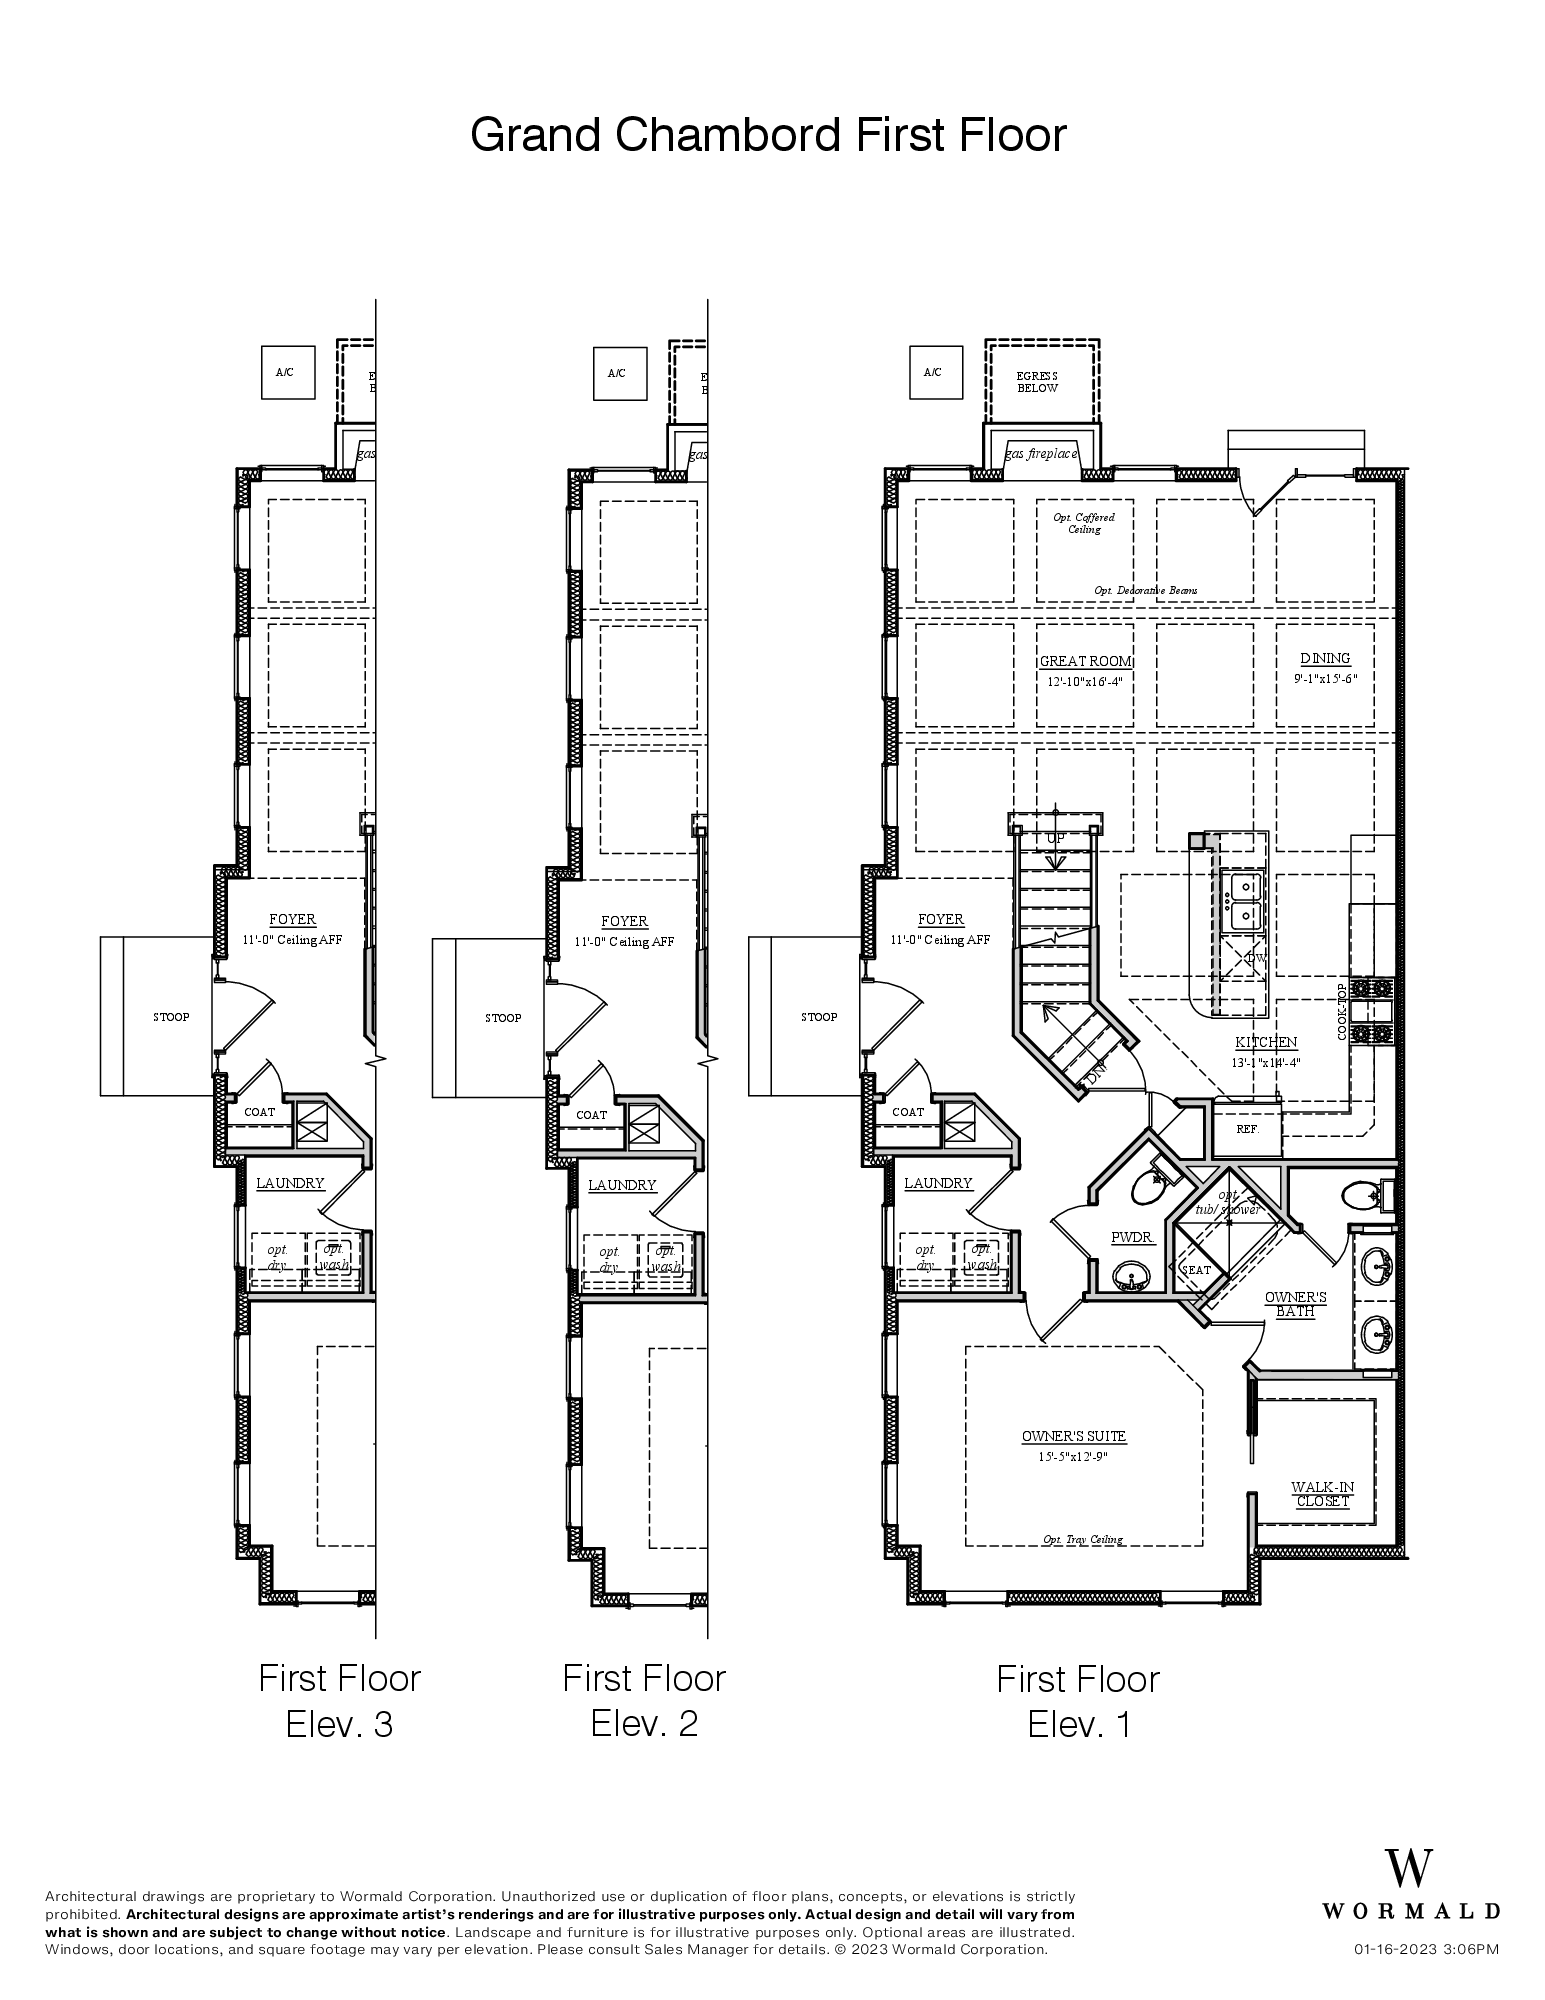 The Grand Chambord floor plan 0